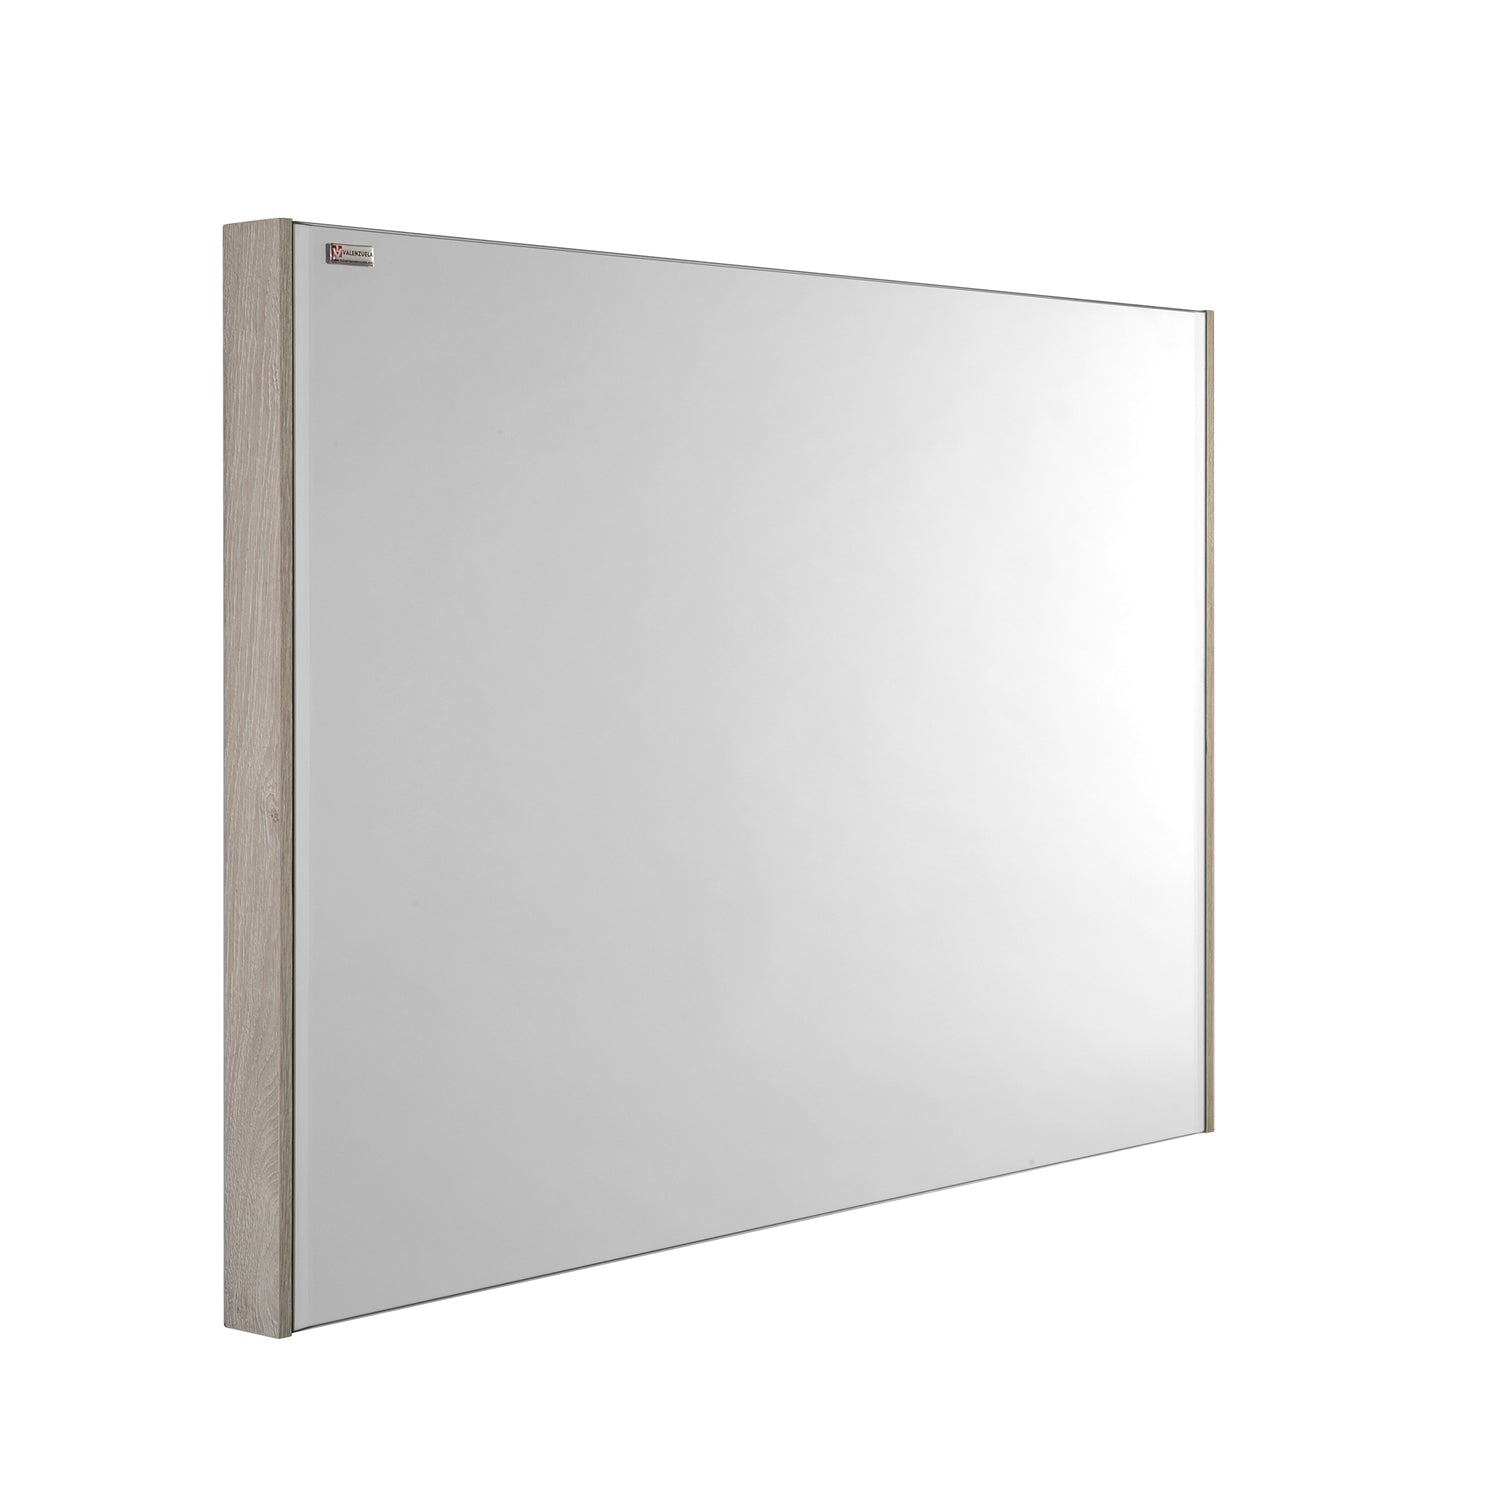 40" Slim Frame Bathroom Vanity Mirror, Wall Mount, Cloud, Serie Barcelona by VALENZUELA